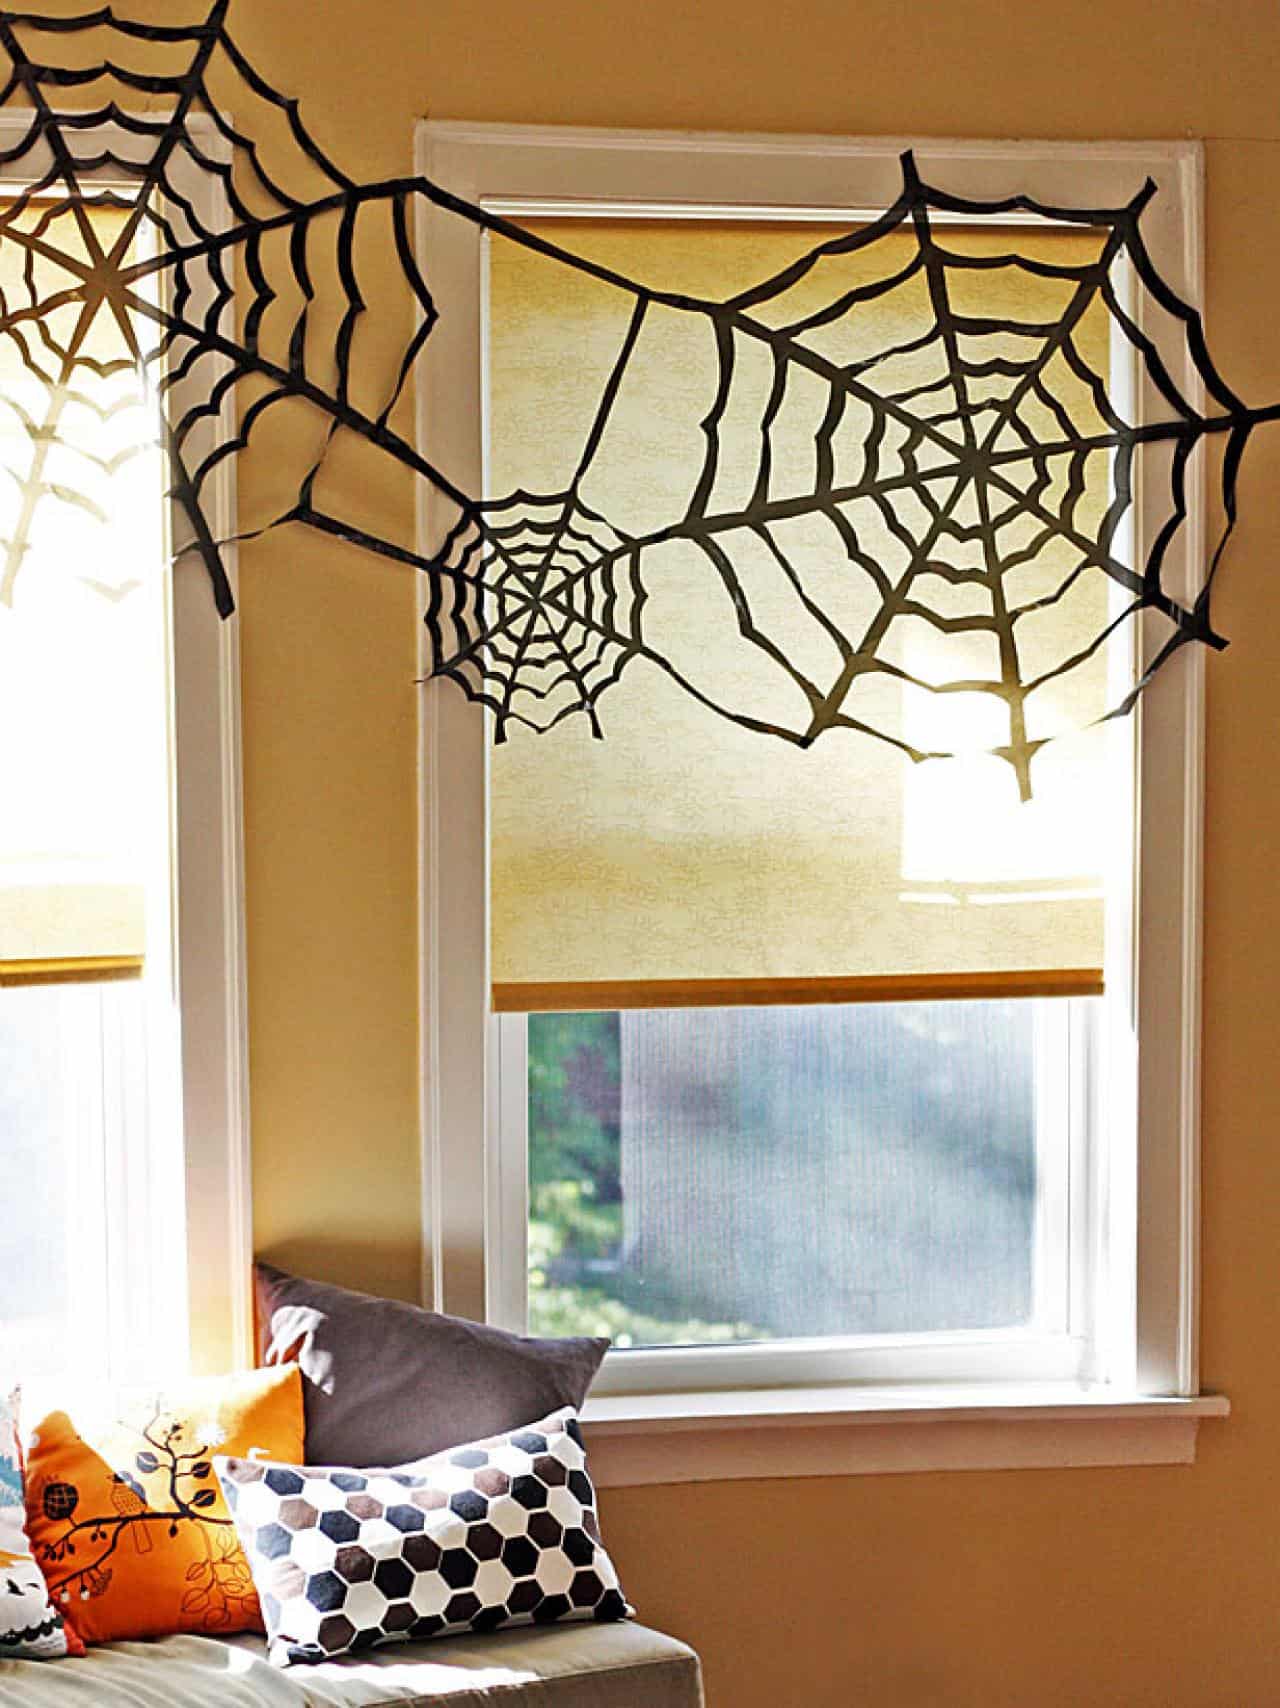 Trash Bag Halloween Spider Web Decoration